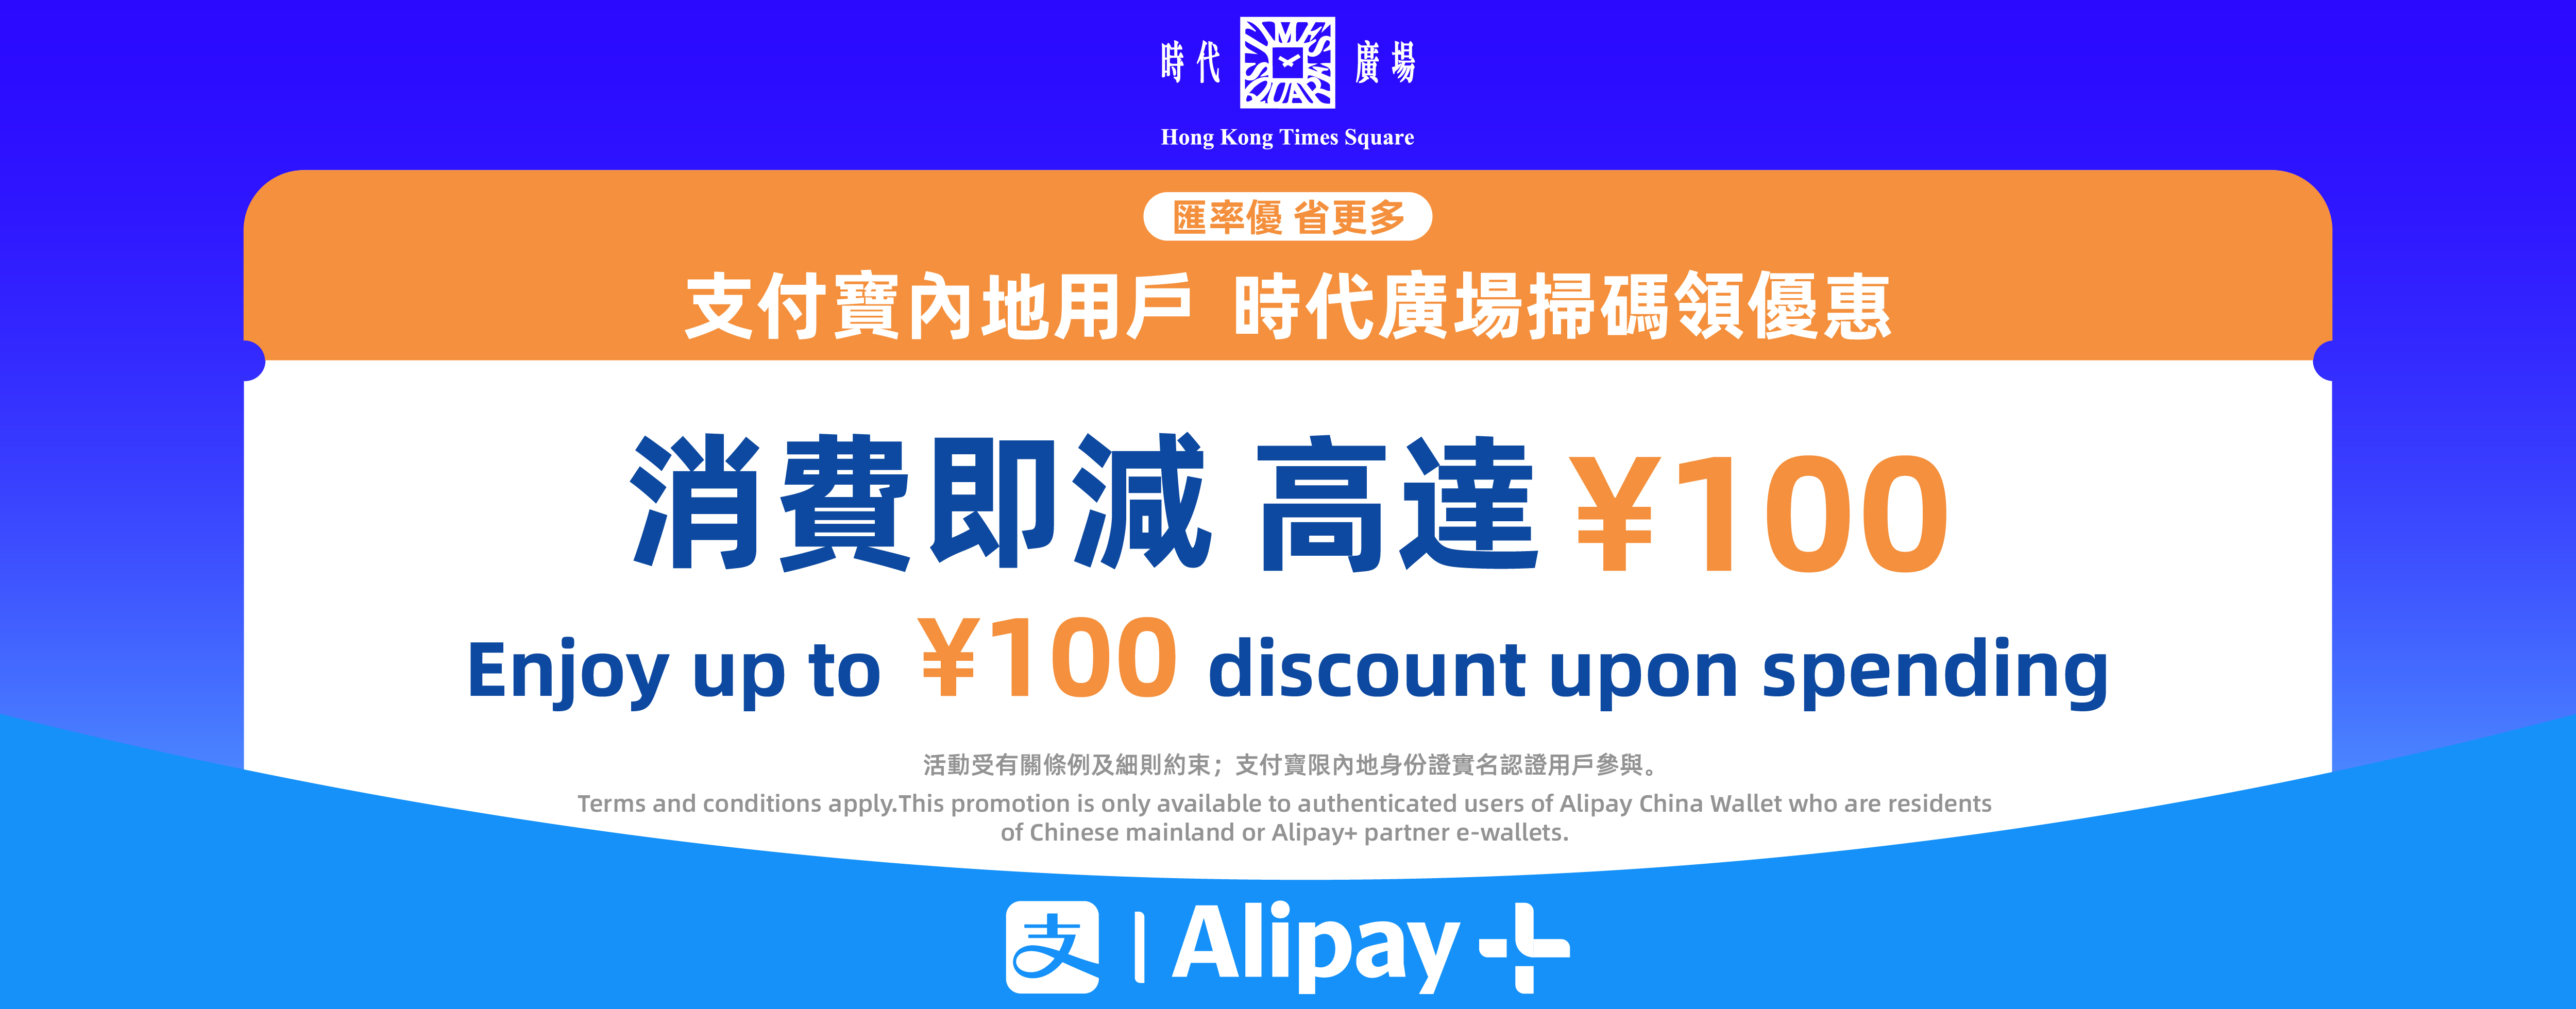 AlipayCN x Times Square Jan - Feb Rewards